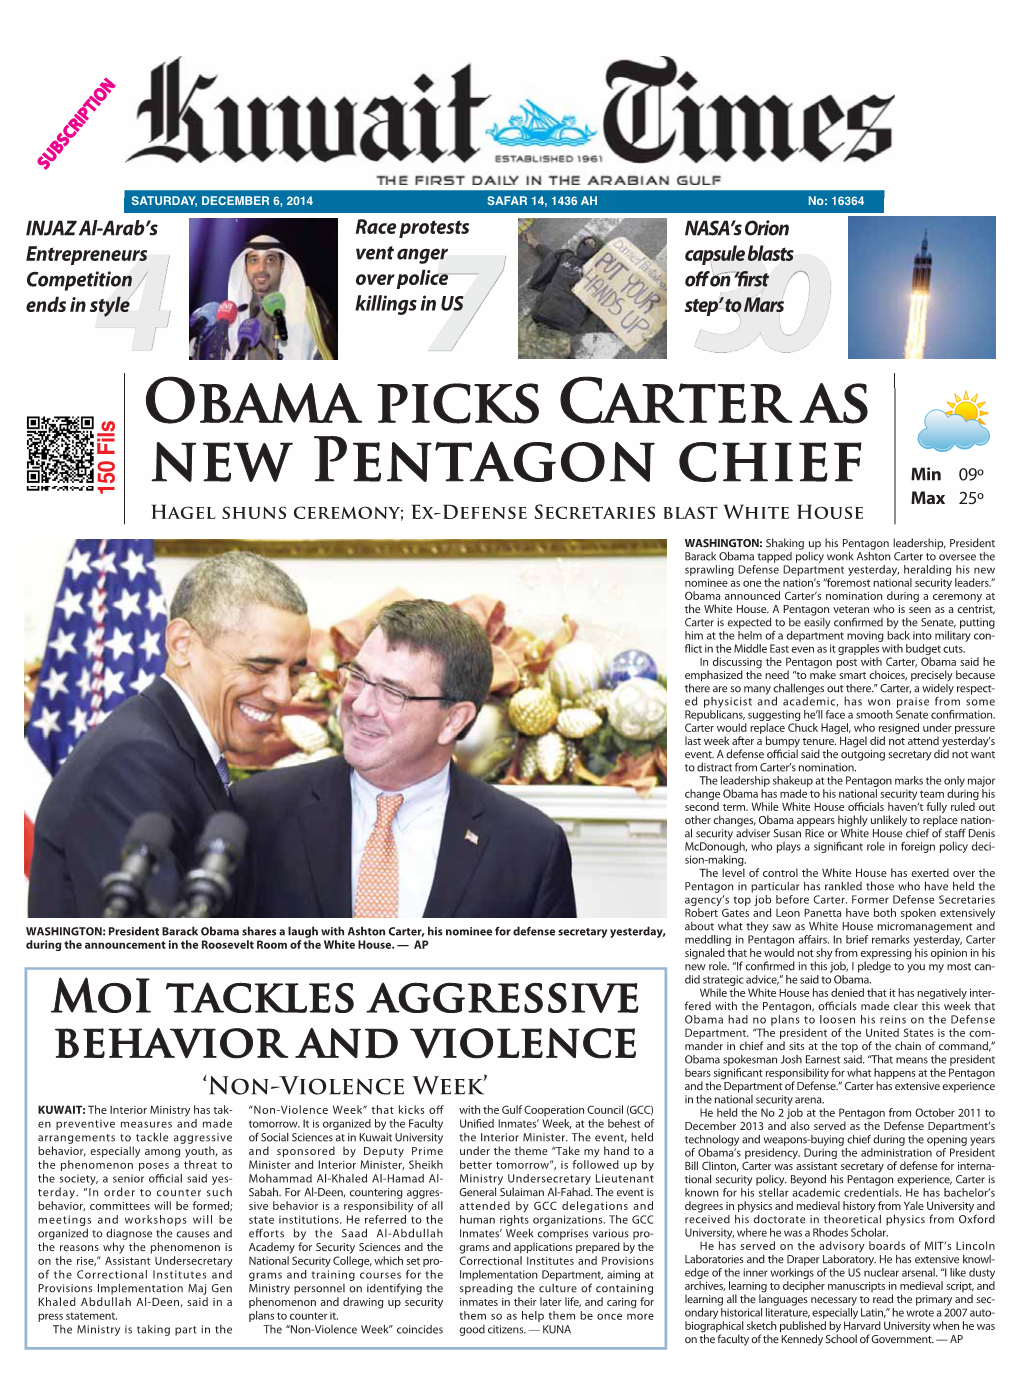 Obama Picks Carter AS New Pentagon Chief Min